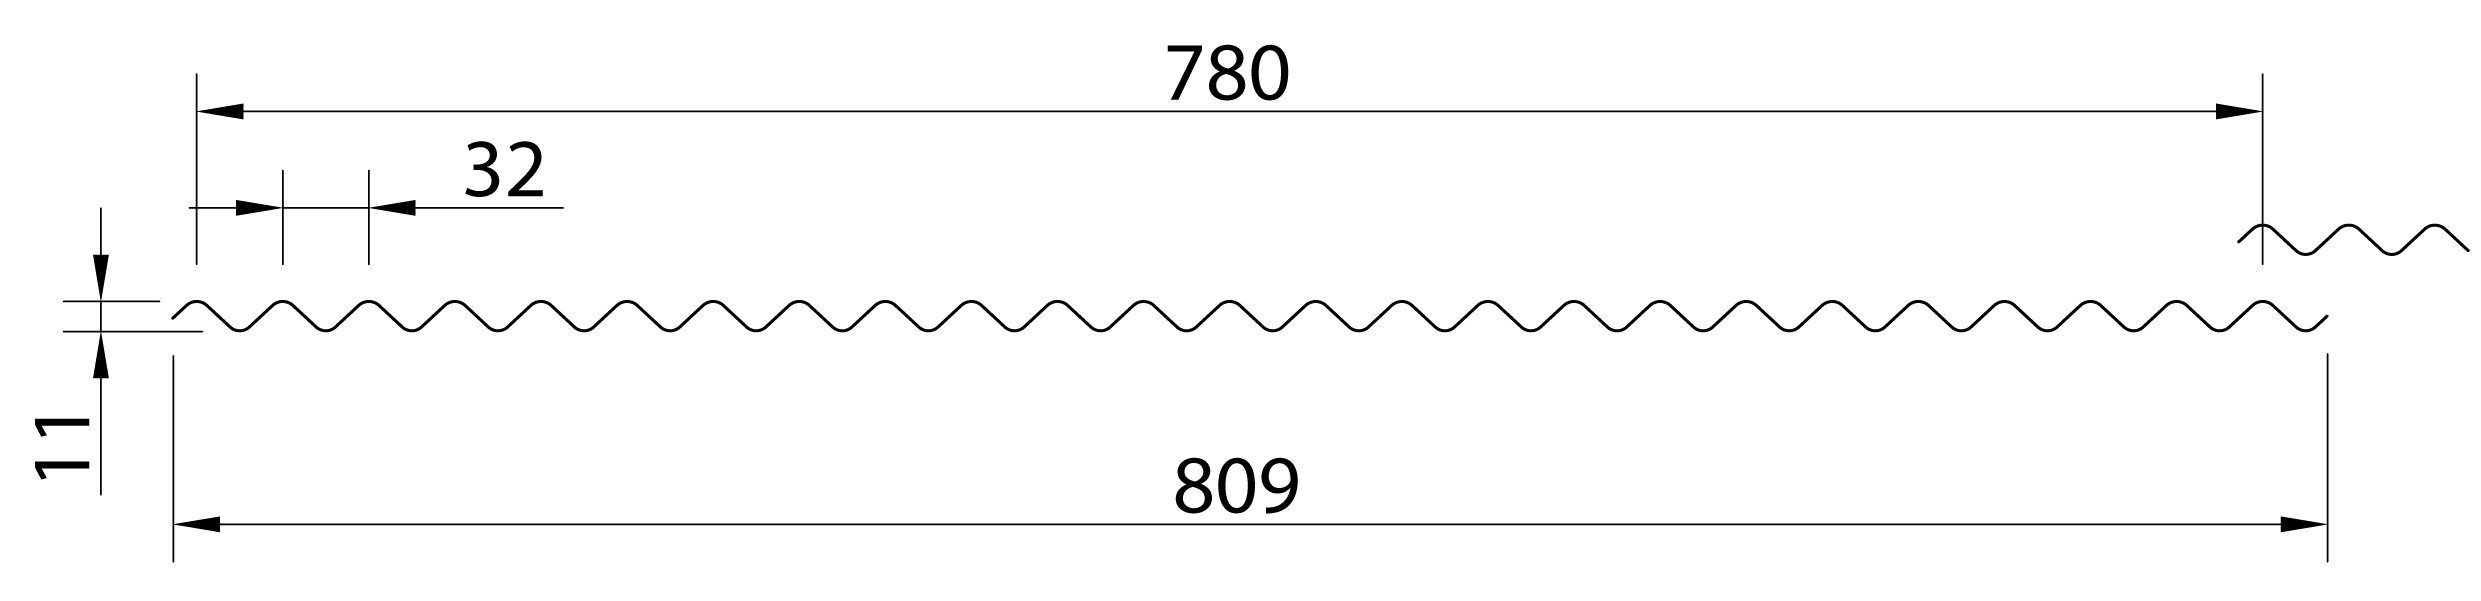 Grafico minionda 780 de acero Ternium